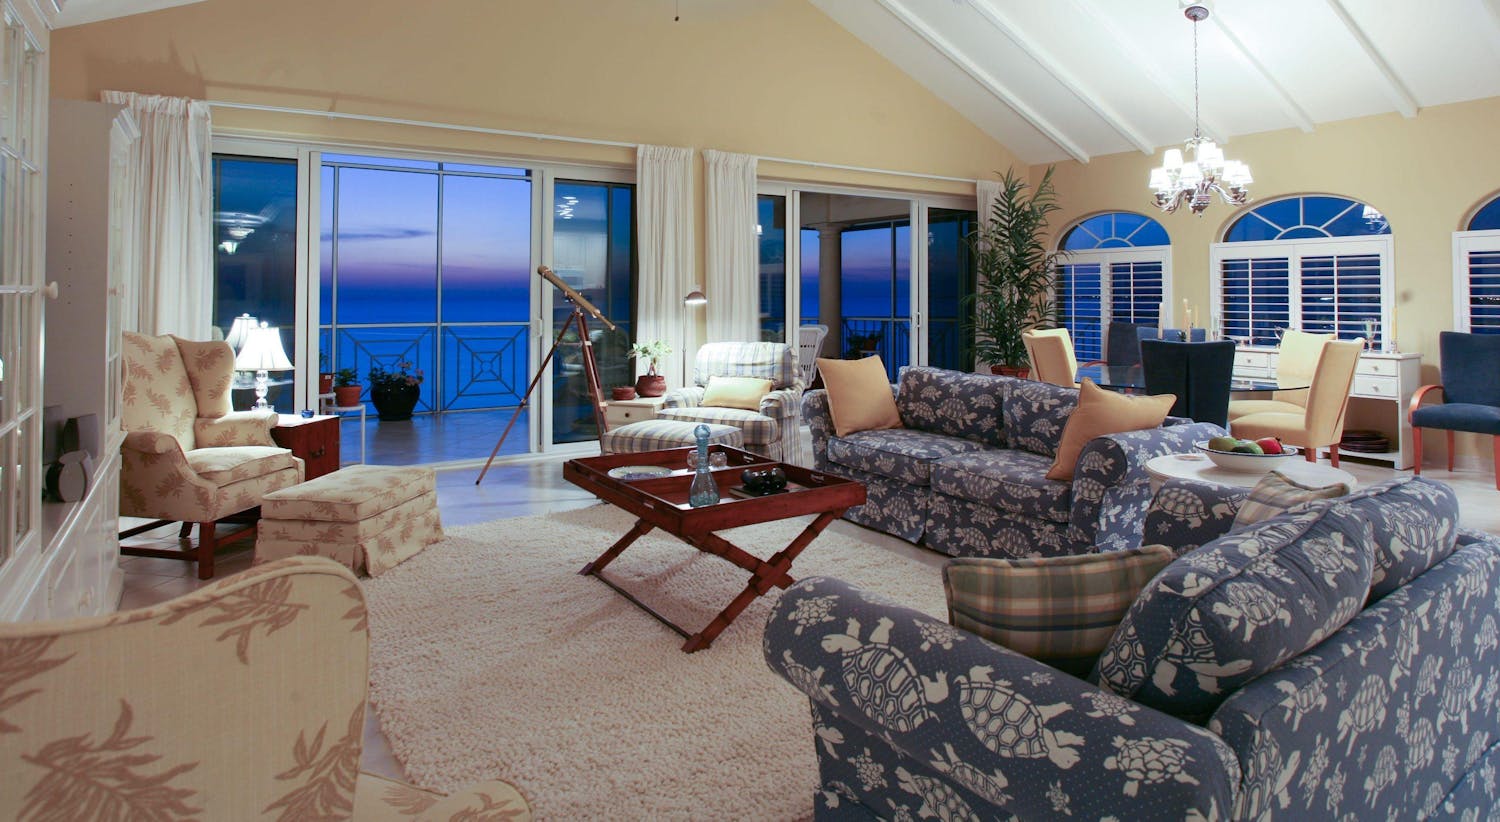 Neutral coloured tropical patterned livingroom furniture gazing over the ocean at dusk